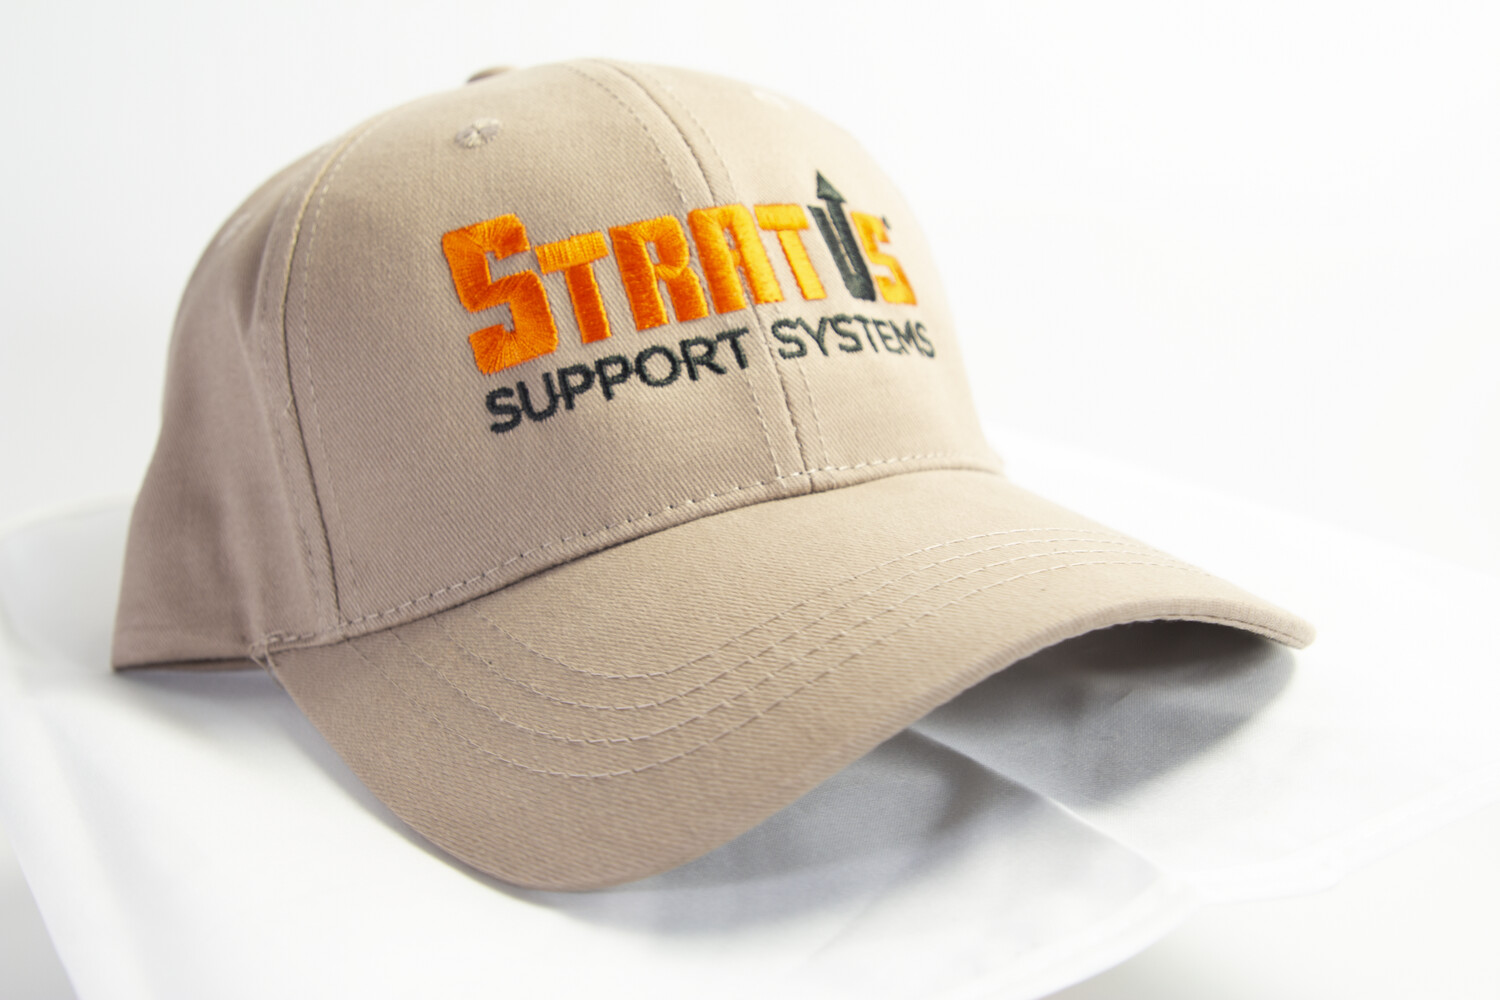 STRATUS Support System Ballcap